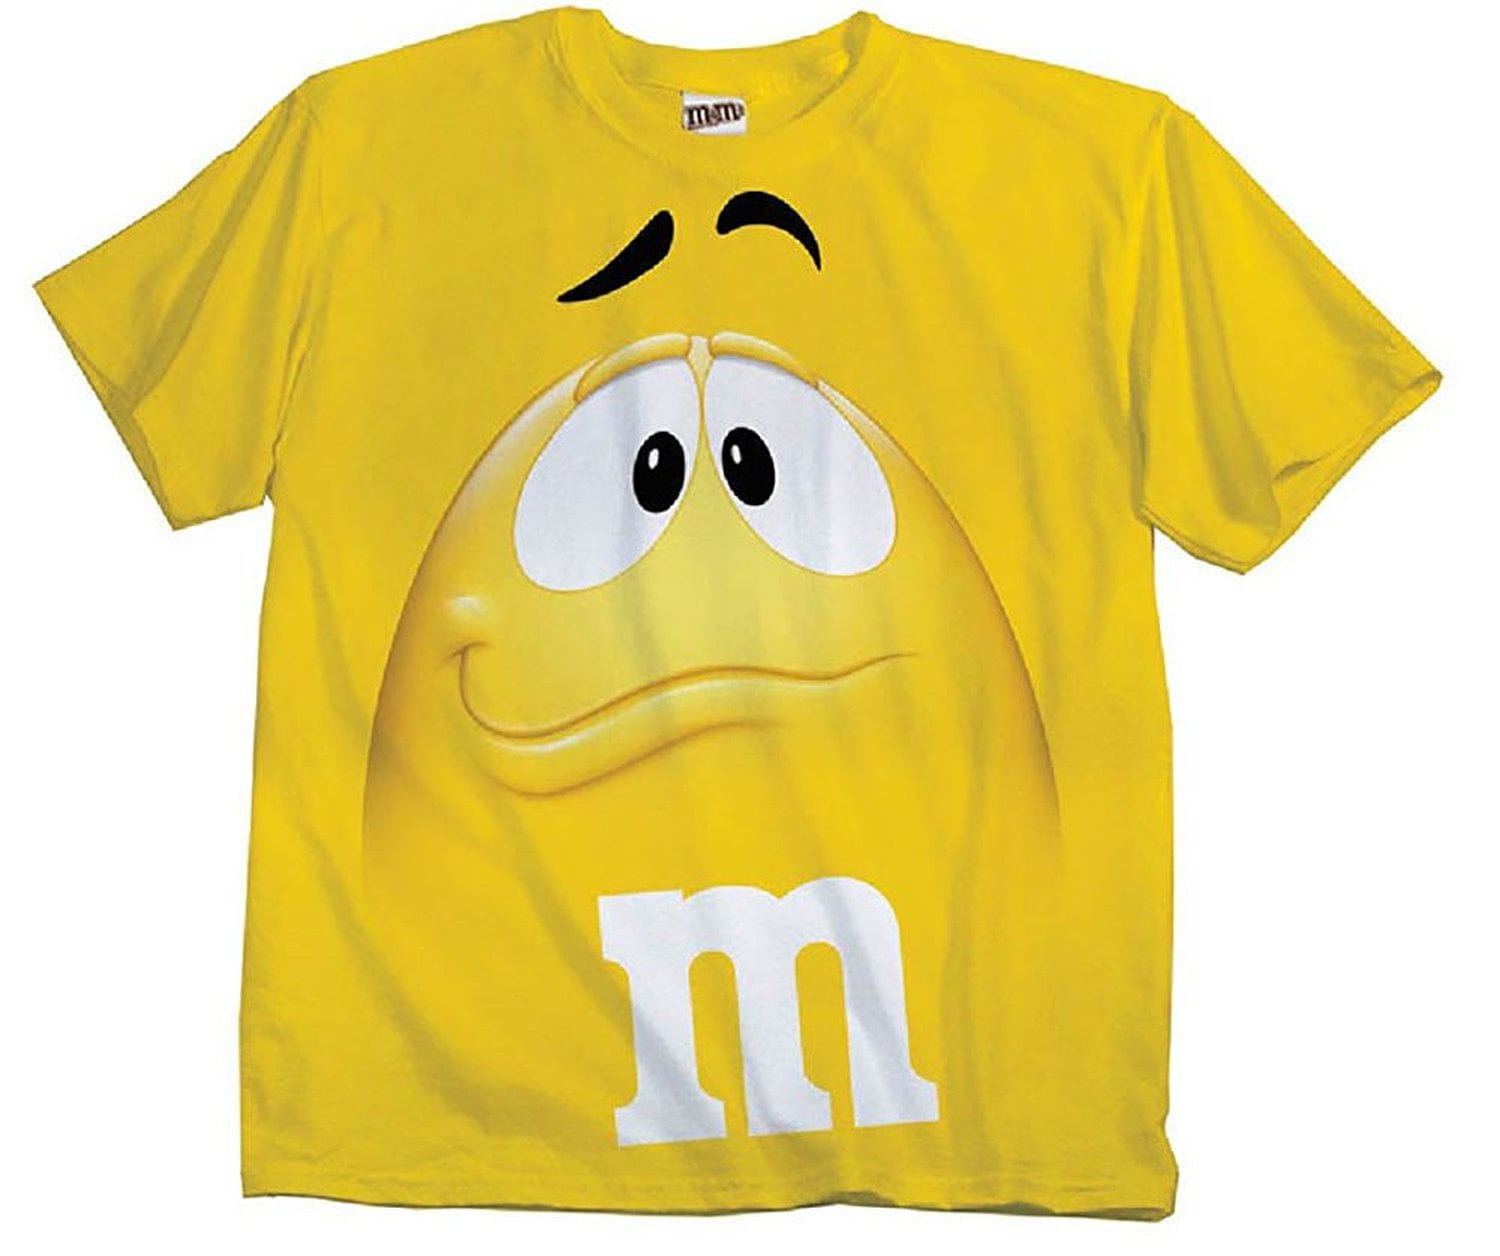 Футболка m m's. Желтая футболка m&MS. Футболка детская желтая m&m. Футболка с принтом смайлики.